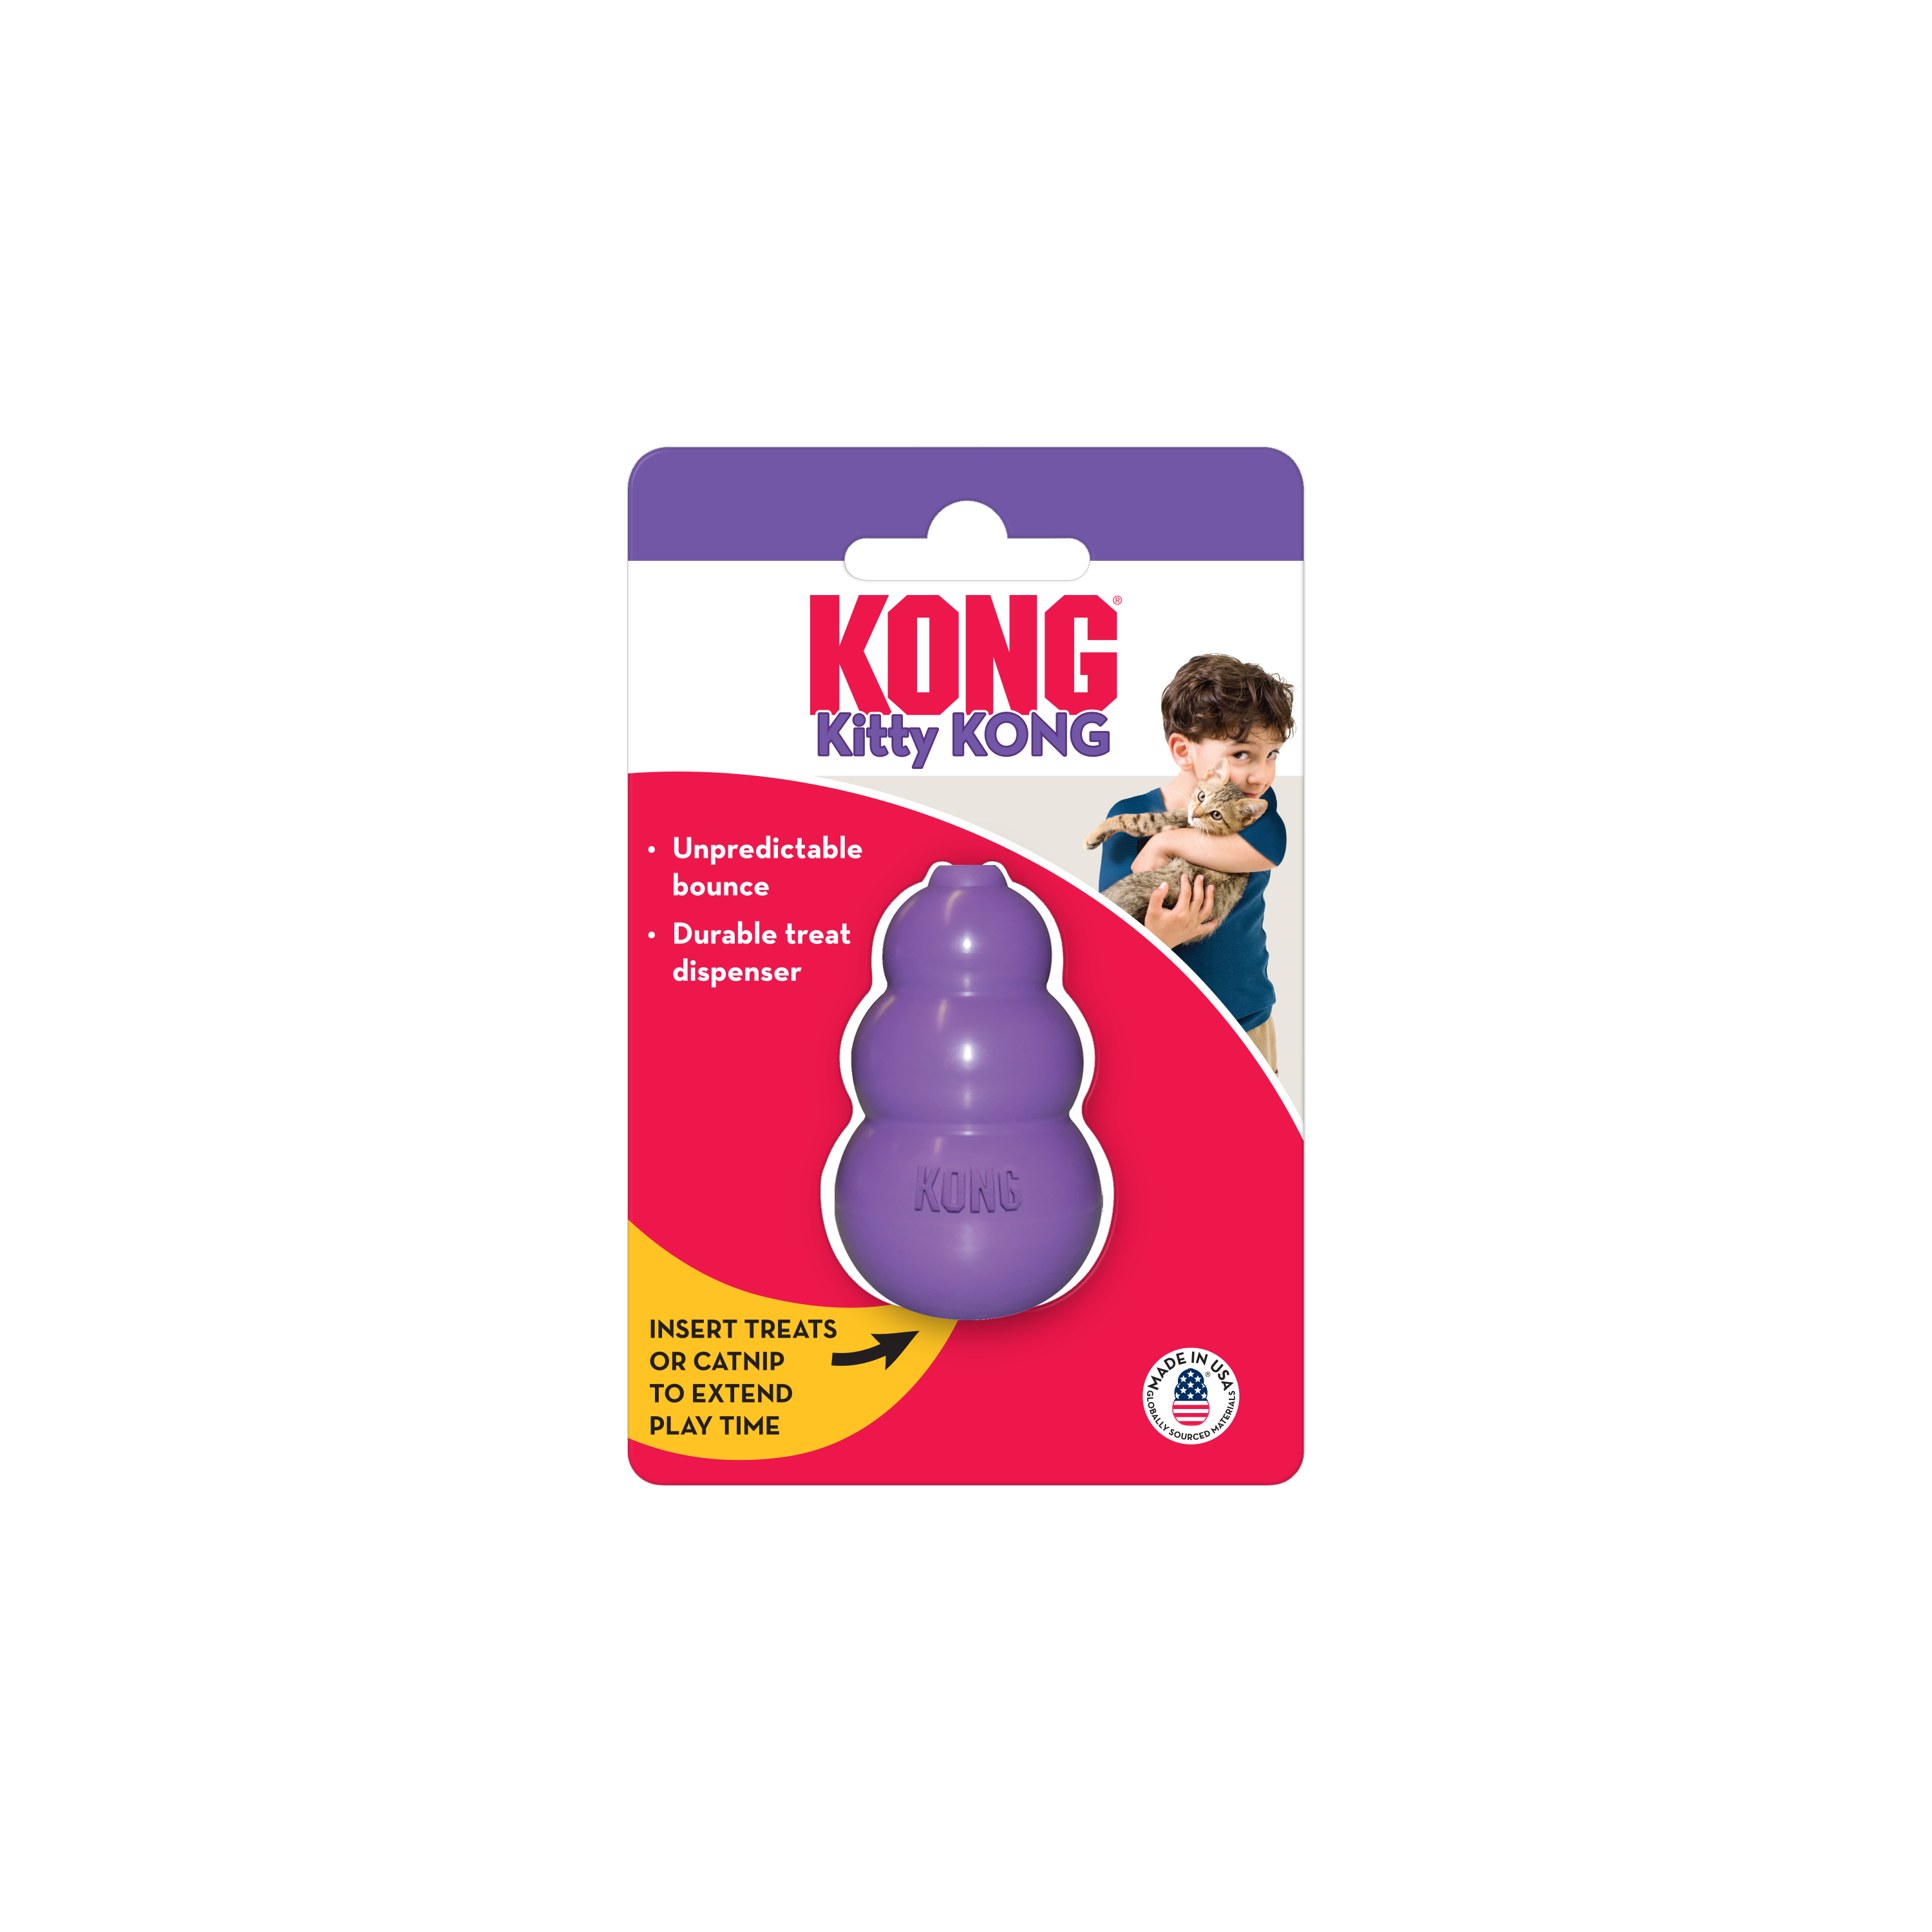 Kitty KONG onpack product image